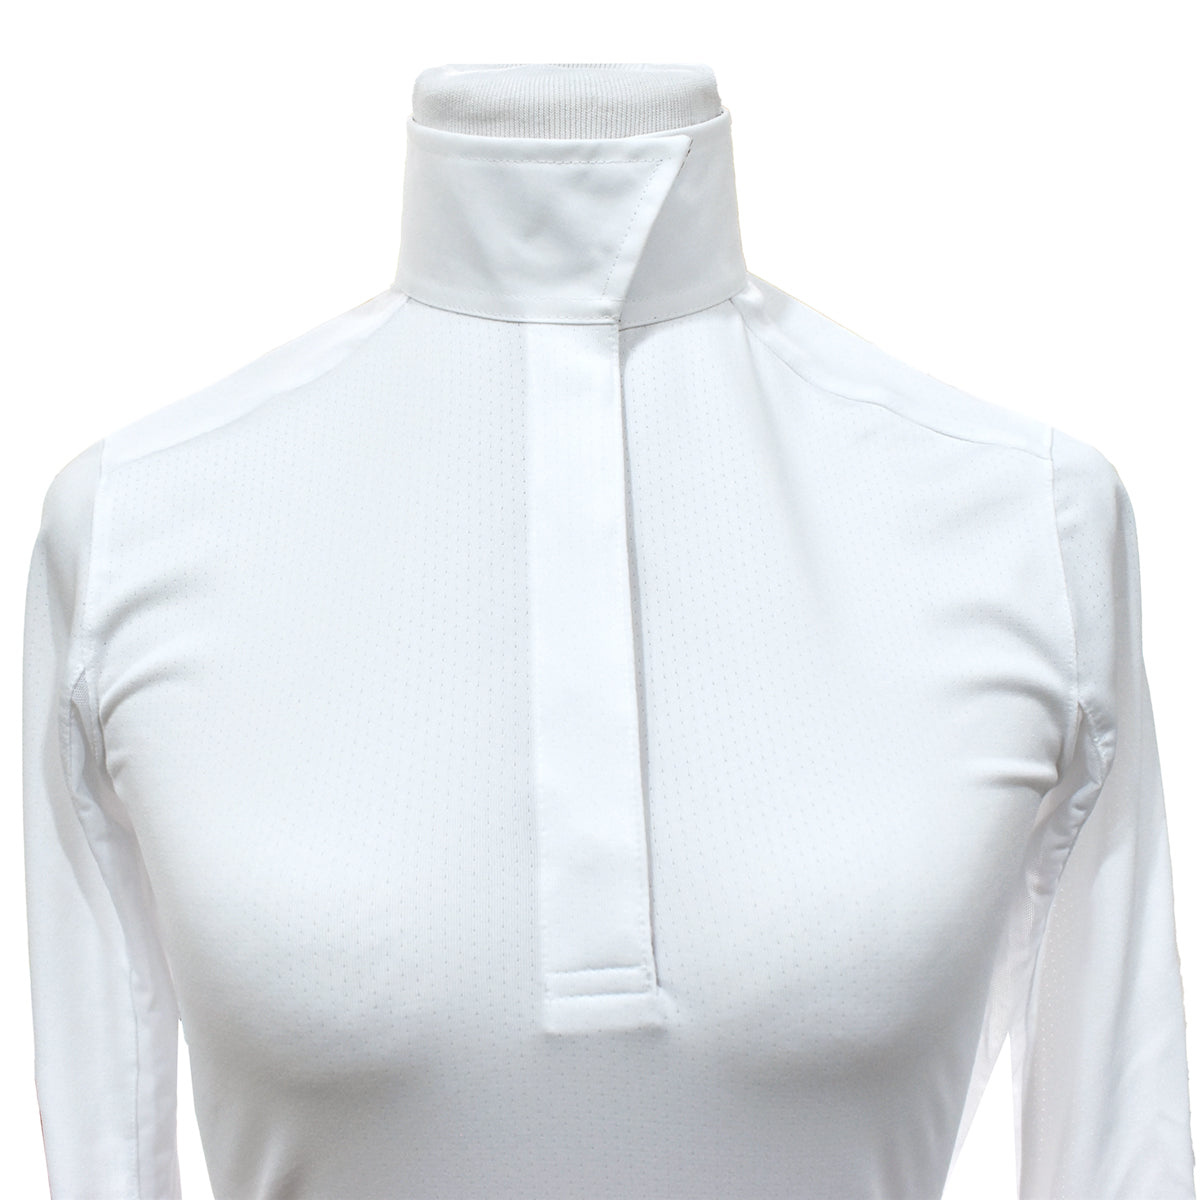 Essex Classics Ladies “Paisley” Talent Yarn Wrap Collar Long Sleeve Show Shirt